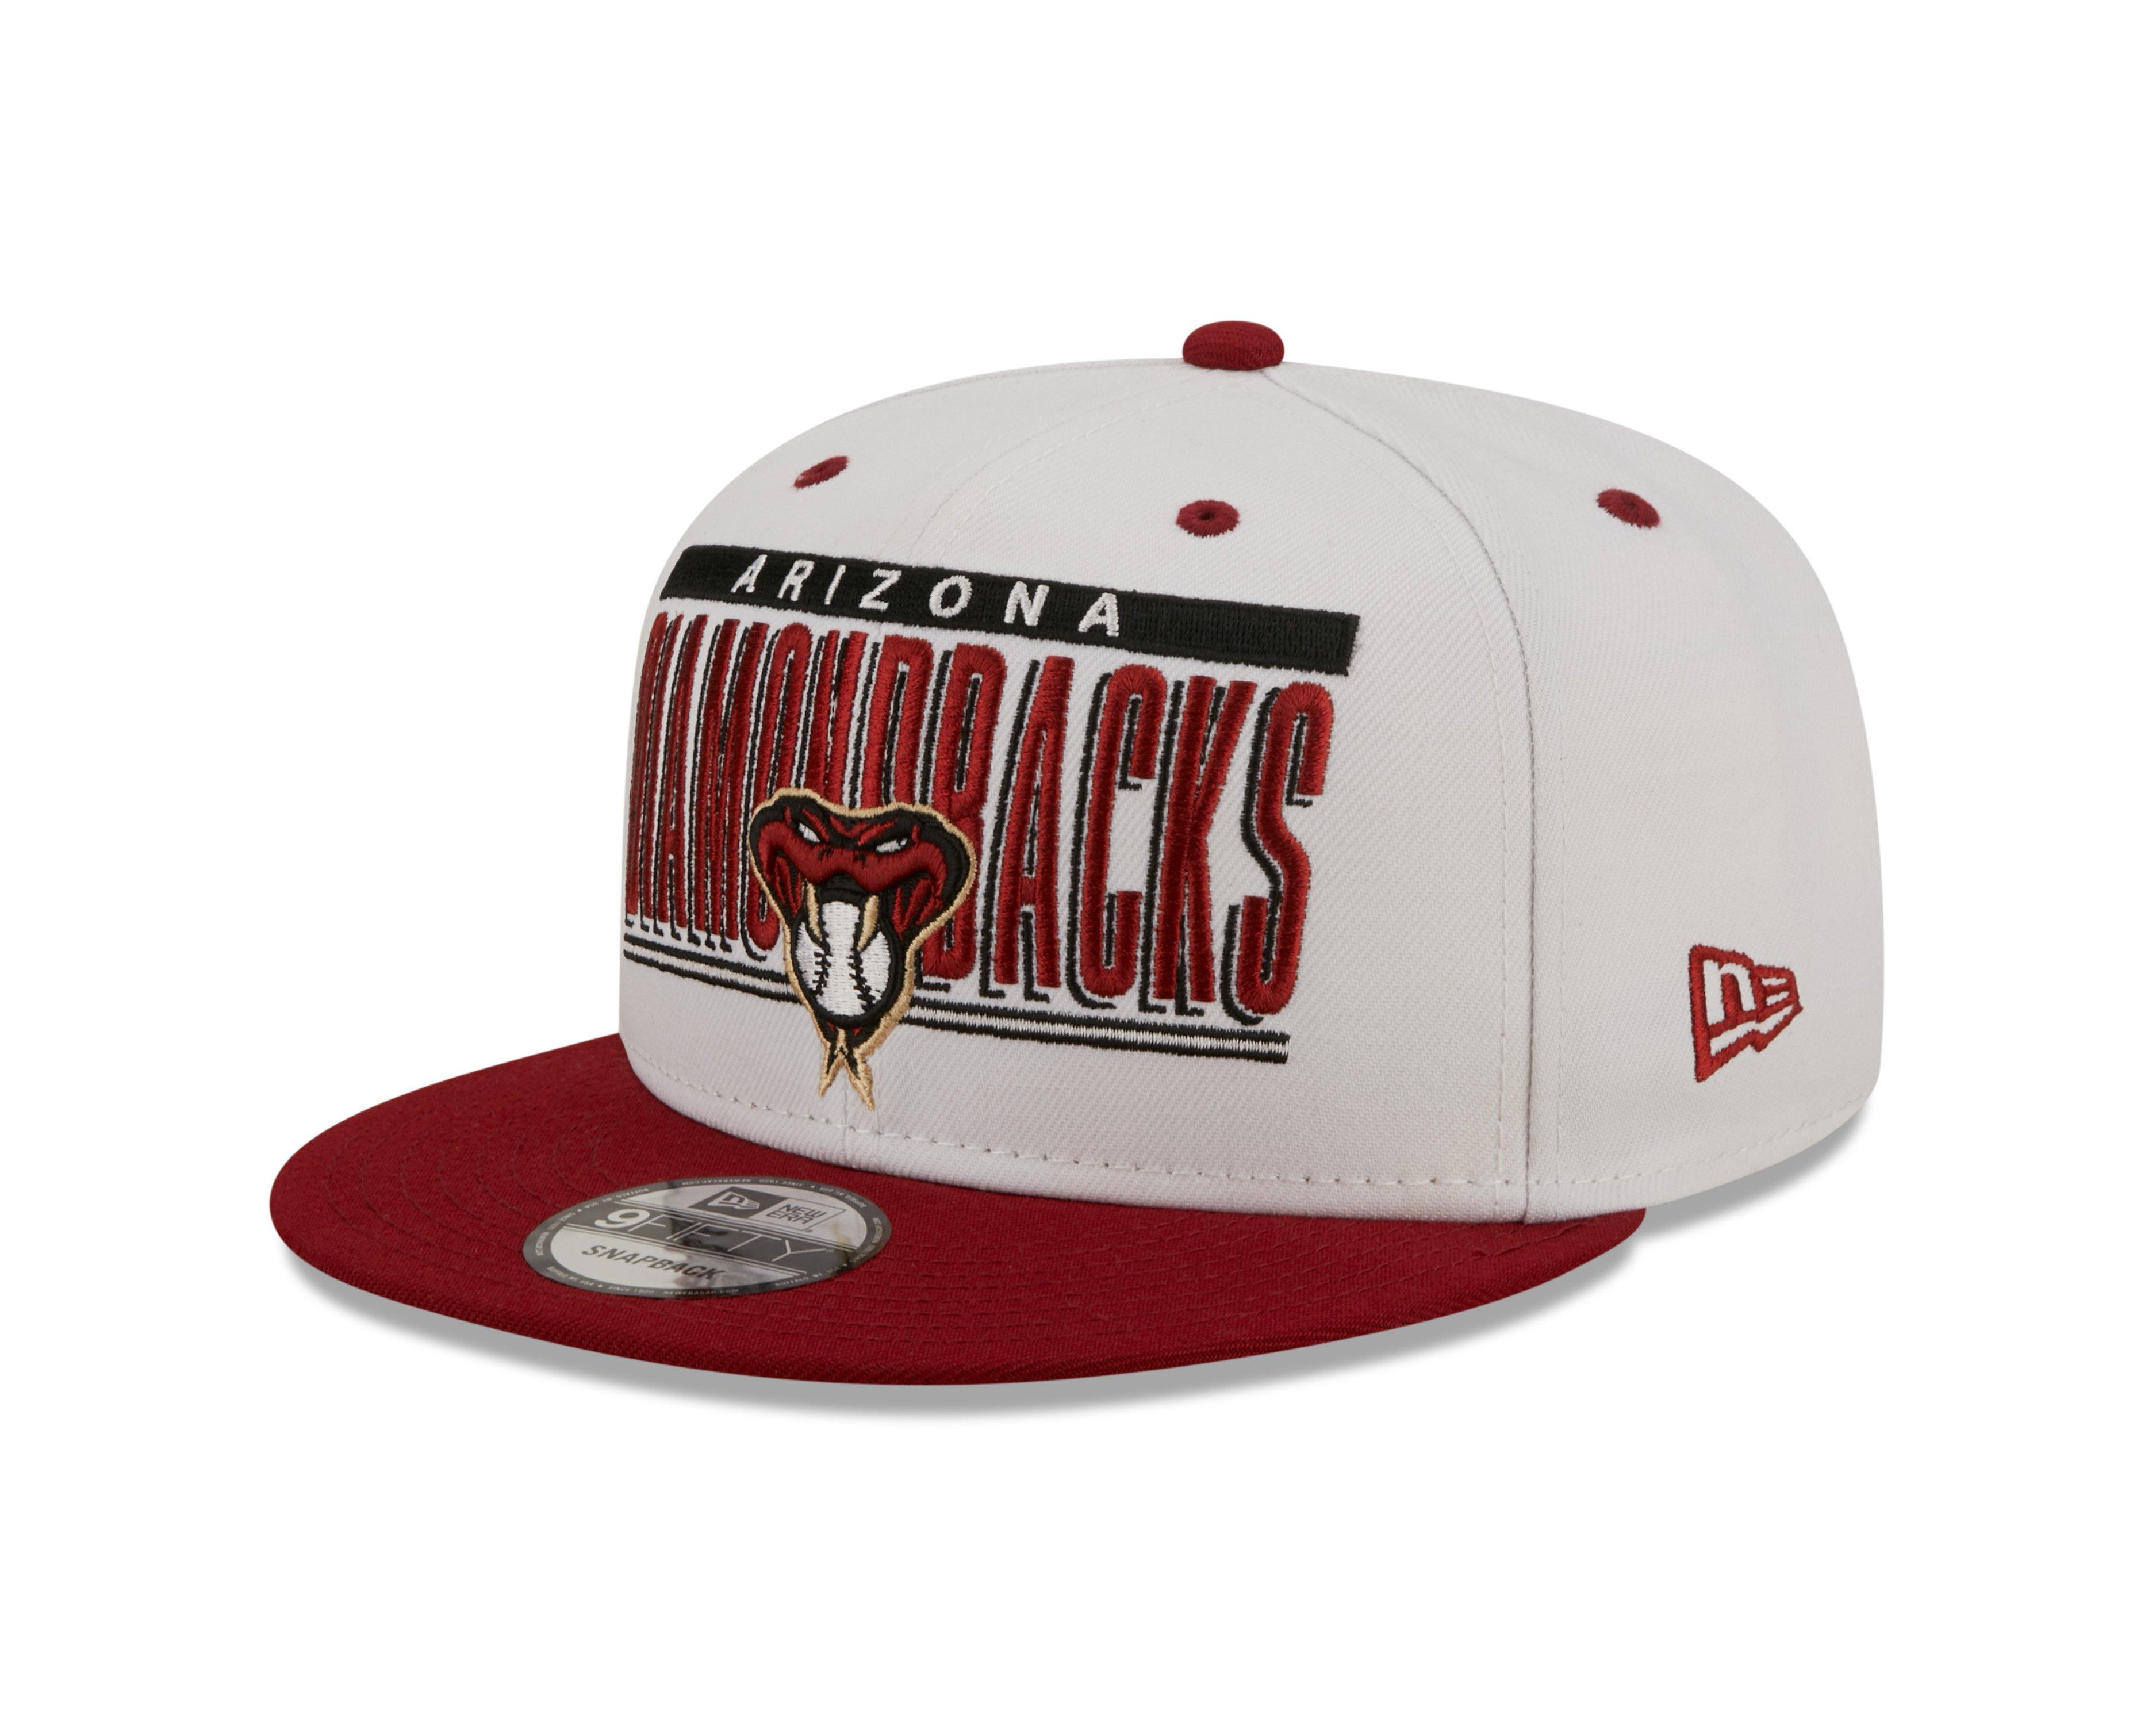 New Era Arizona Diamondbacks MLB 9FIFTY Snapback Hat